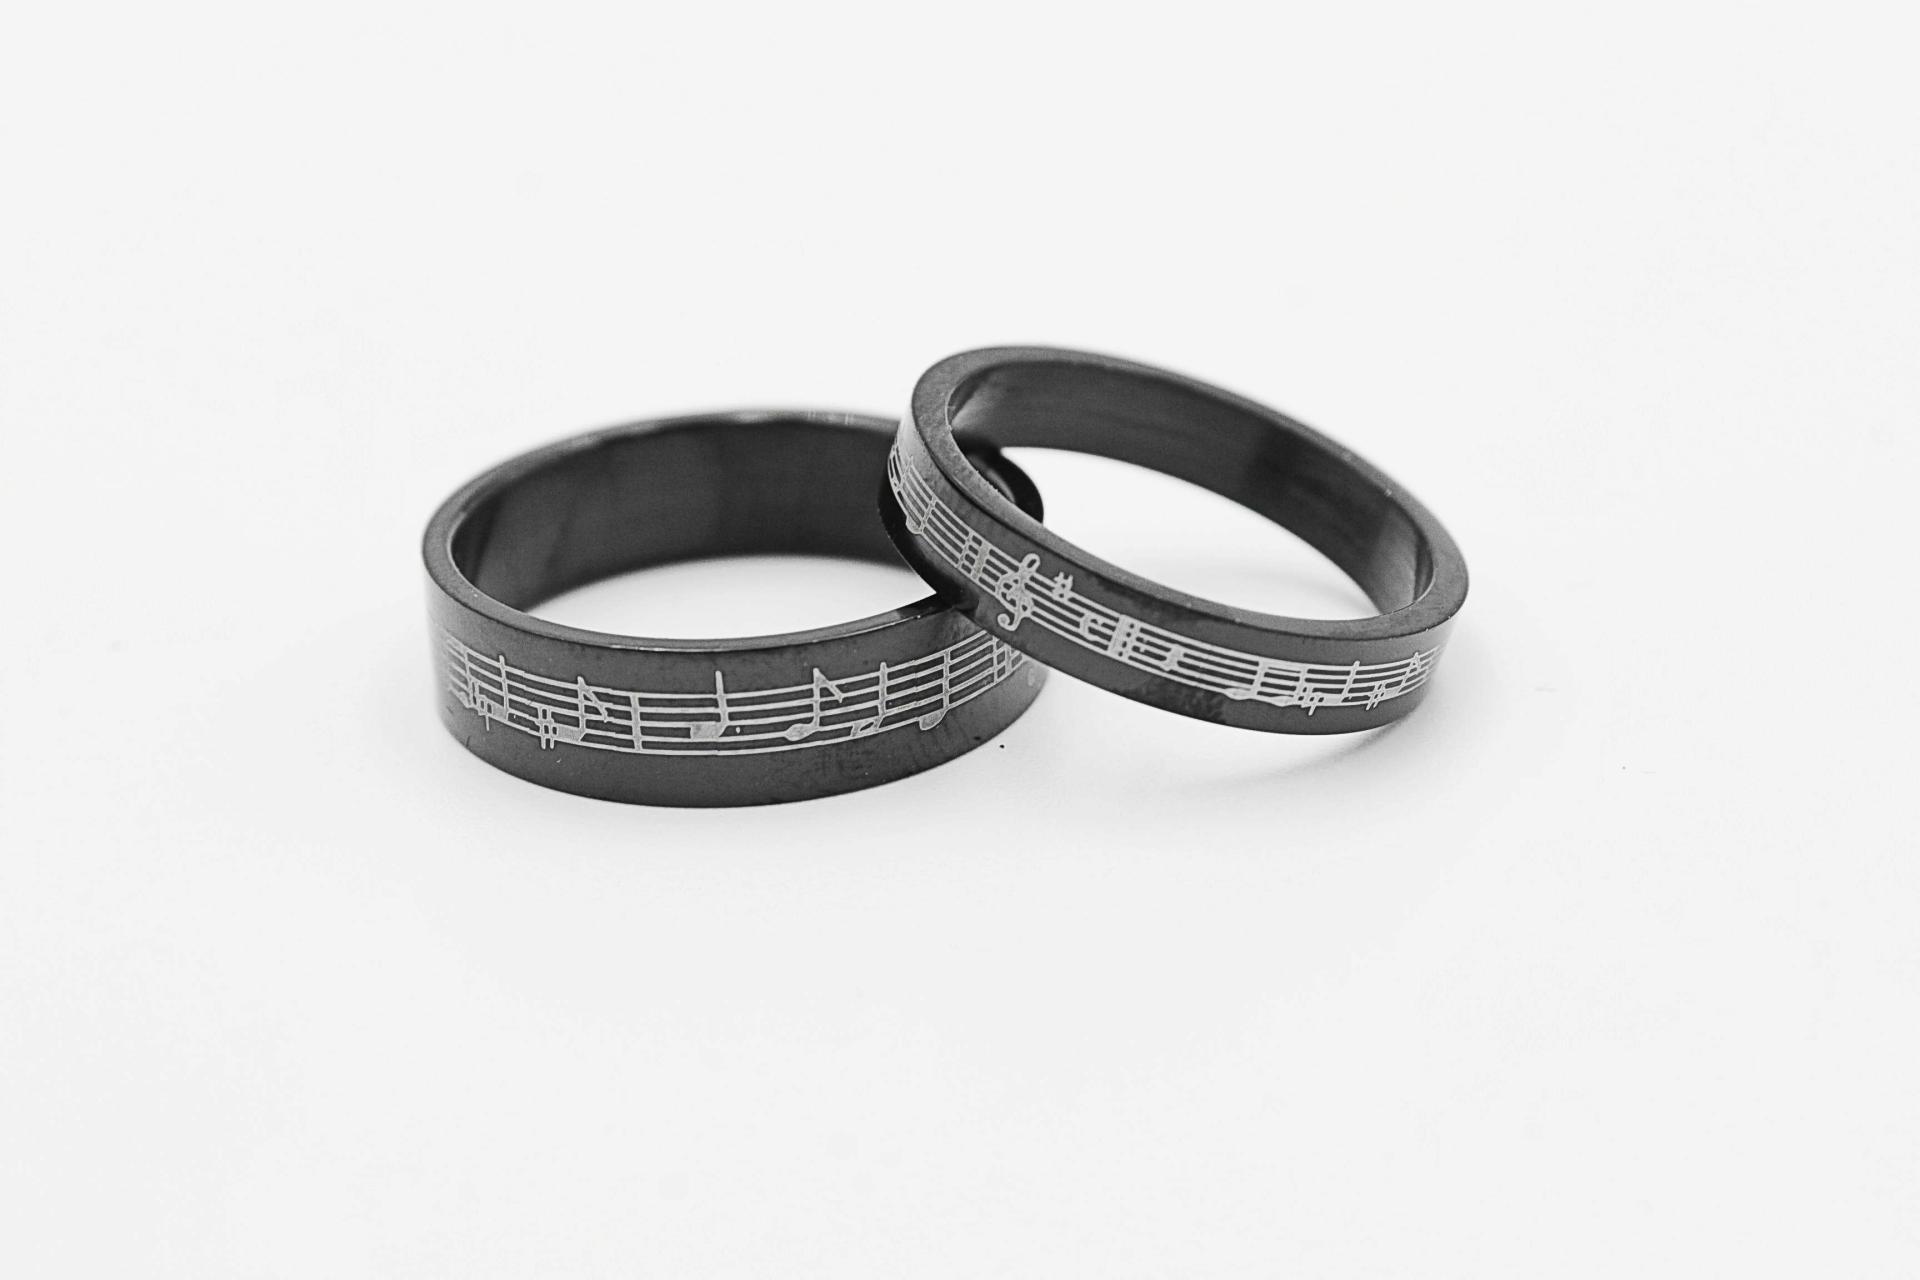 Music Ring - Romantic Black Stainless Steel Music band rings